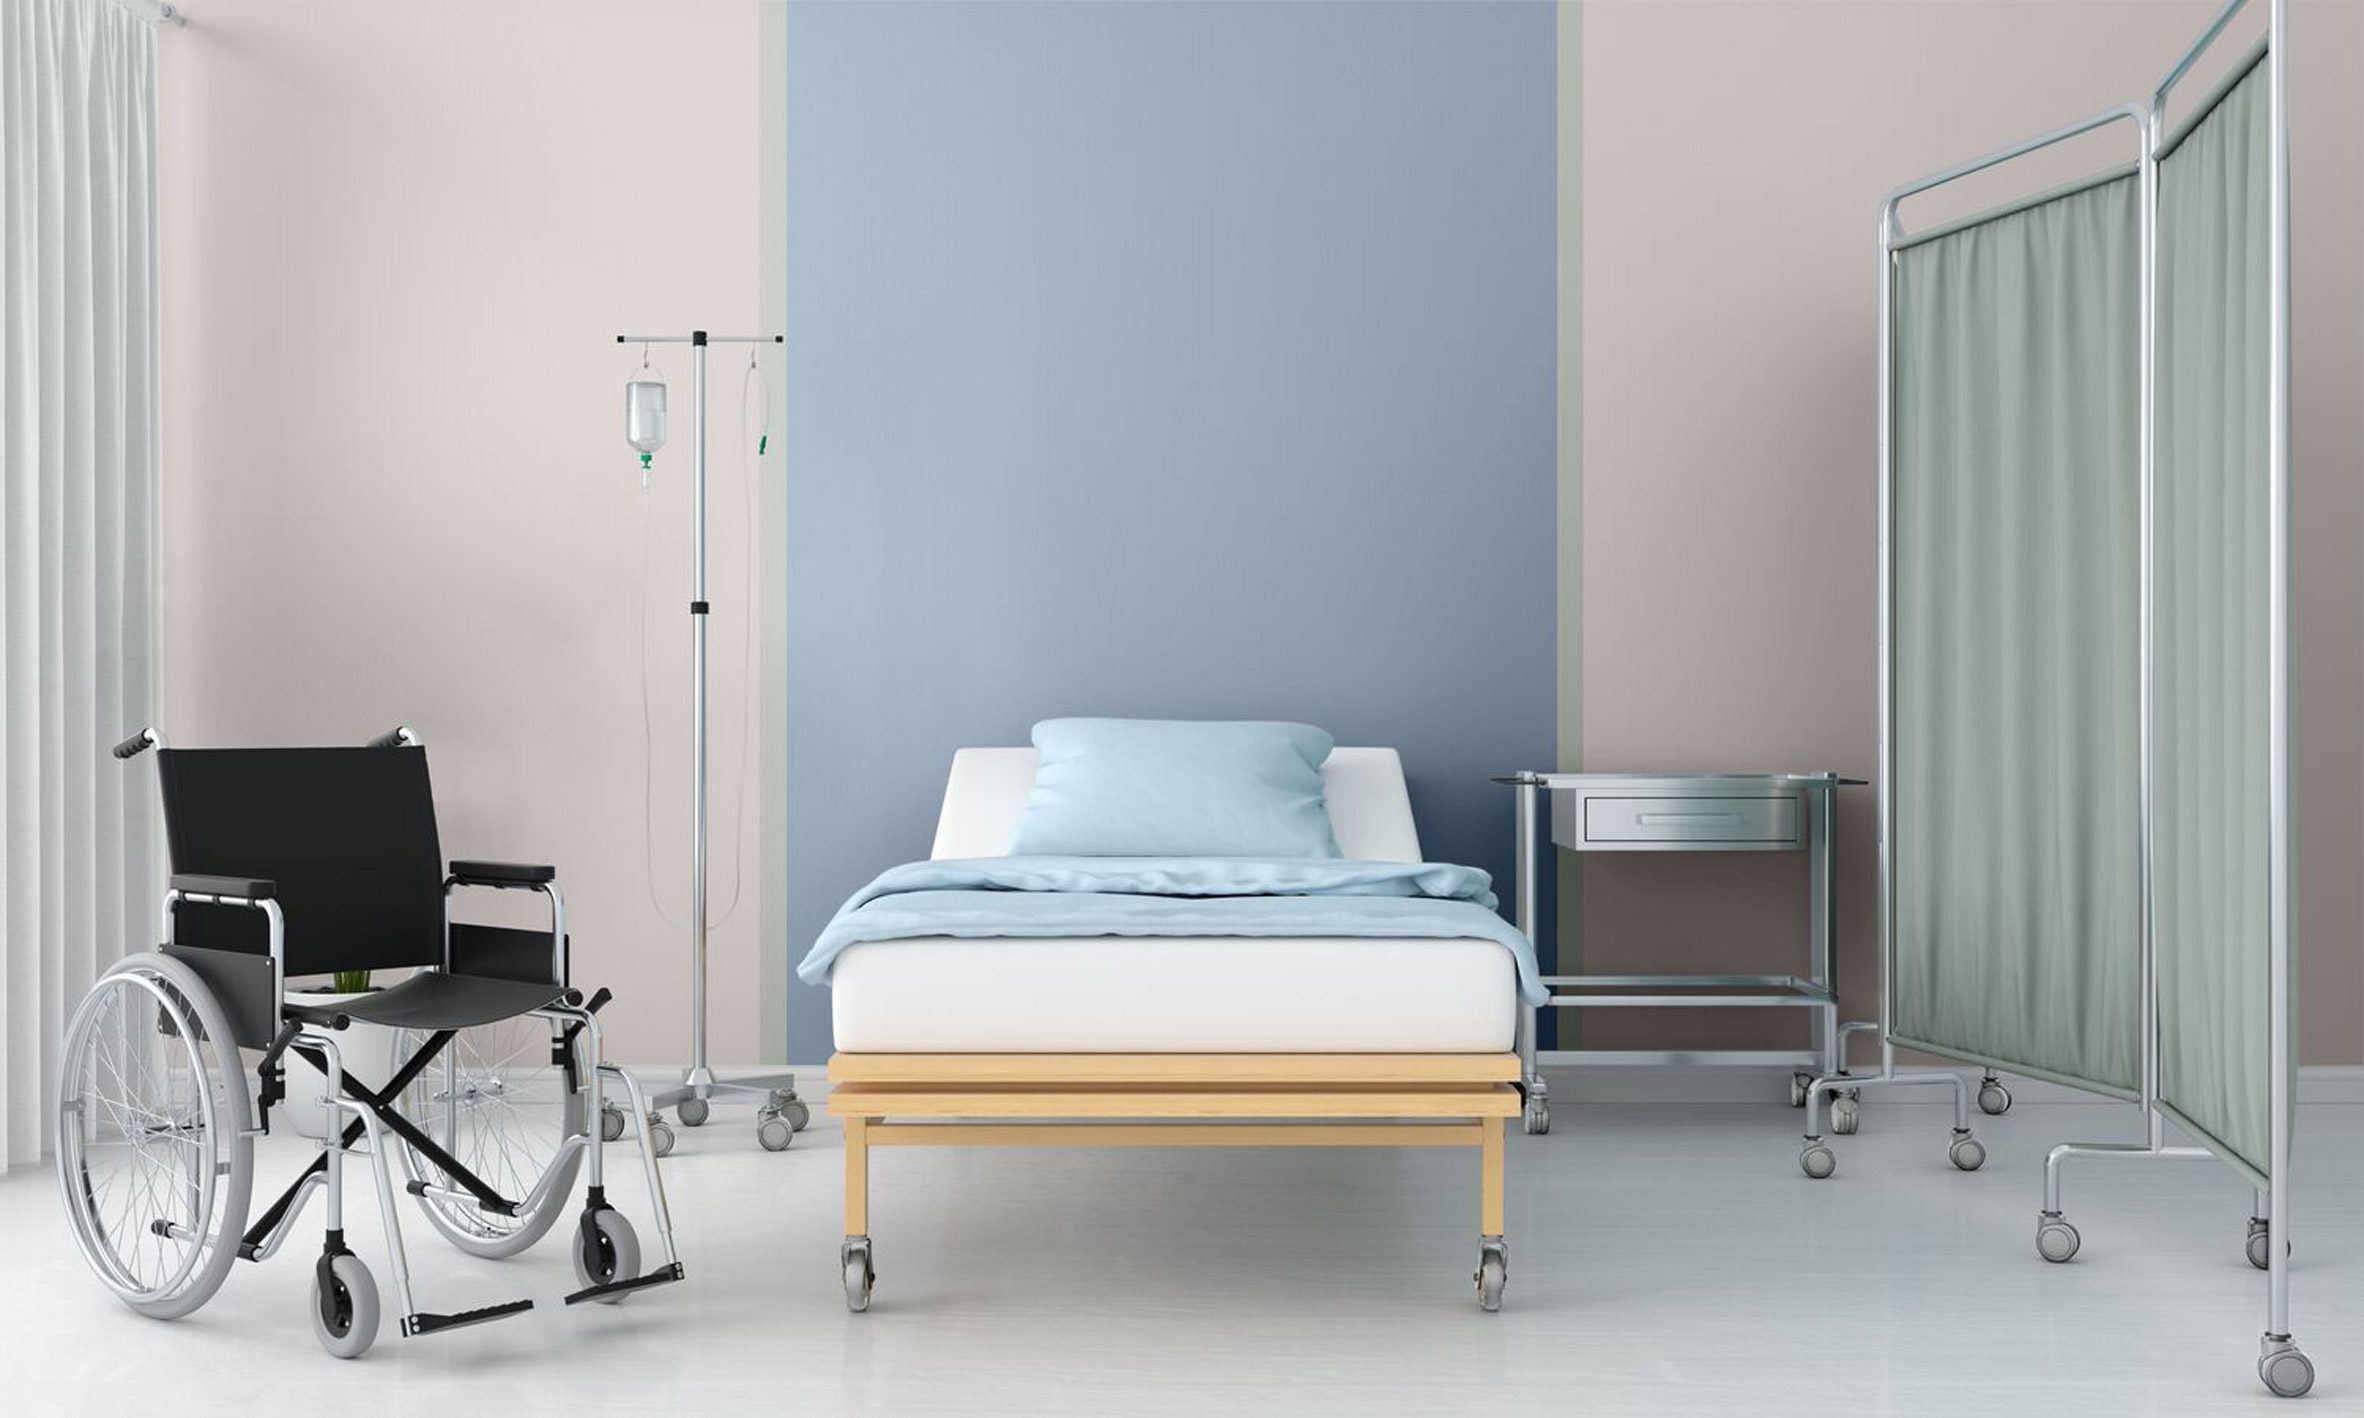 Blush coloured walls in a hospital ward